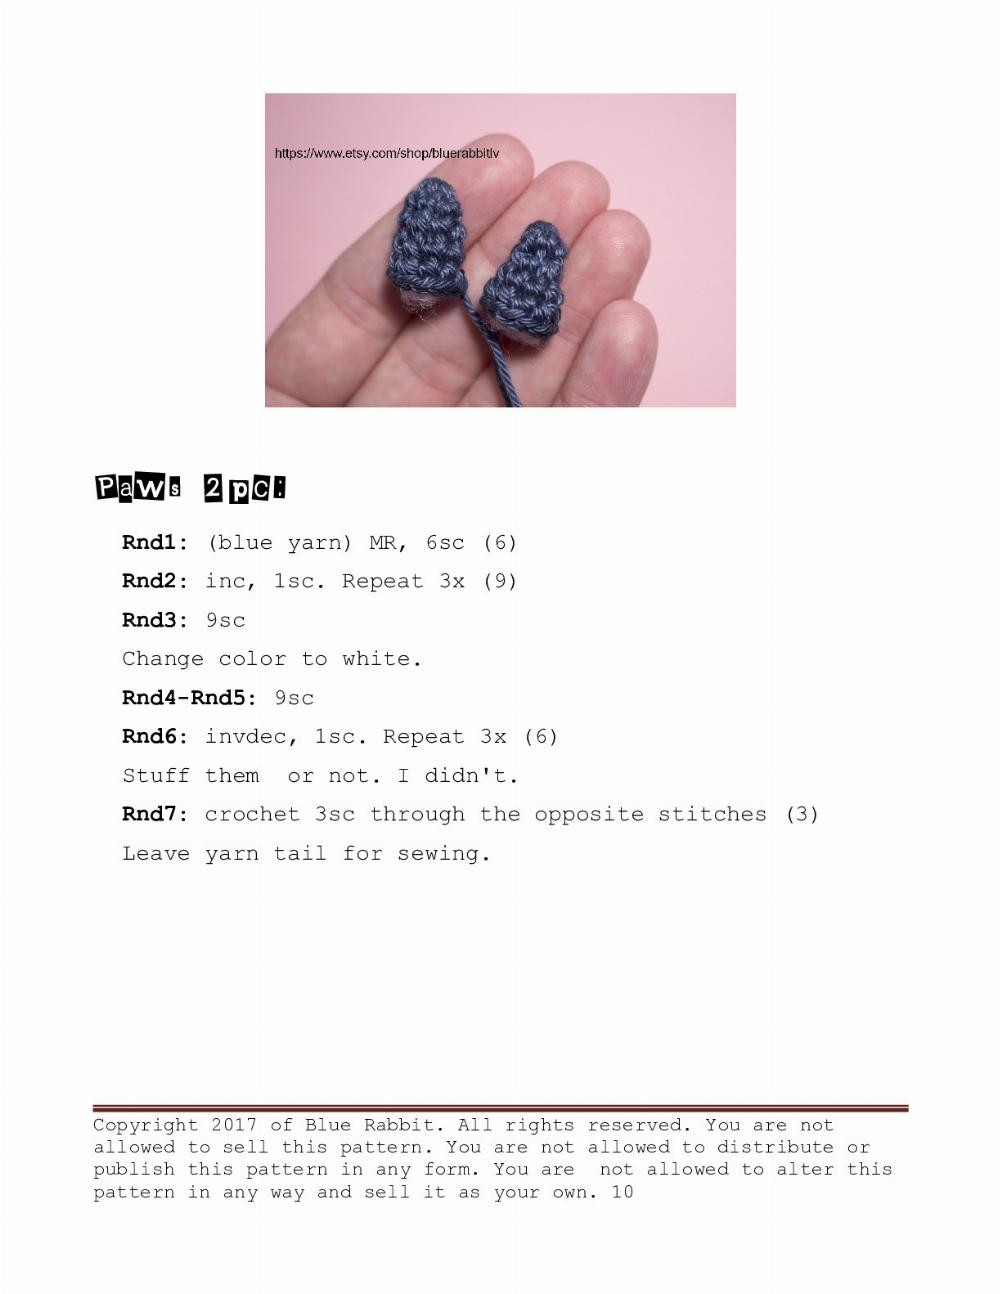 Chubby Yeti crochet pattern Made by Blue Rabbit